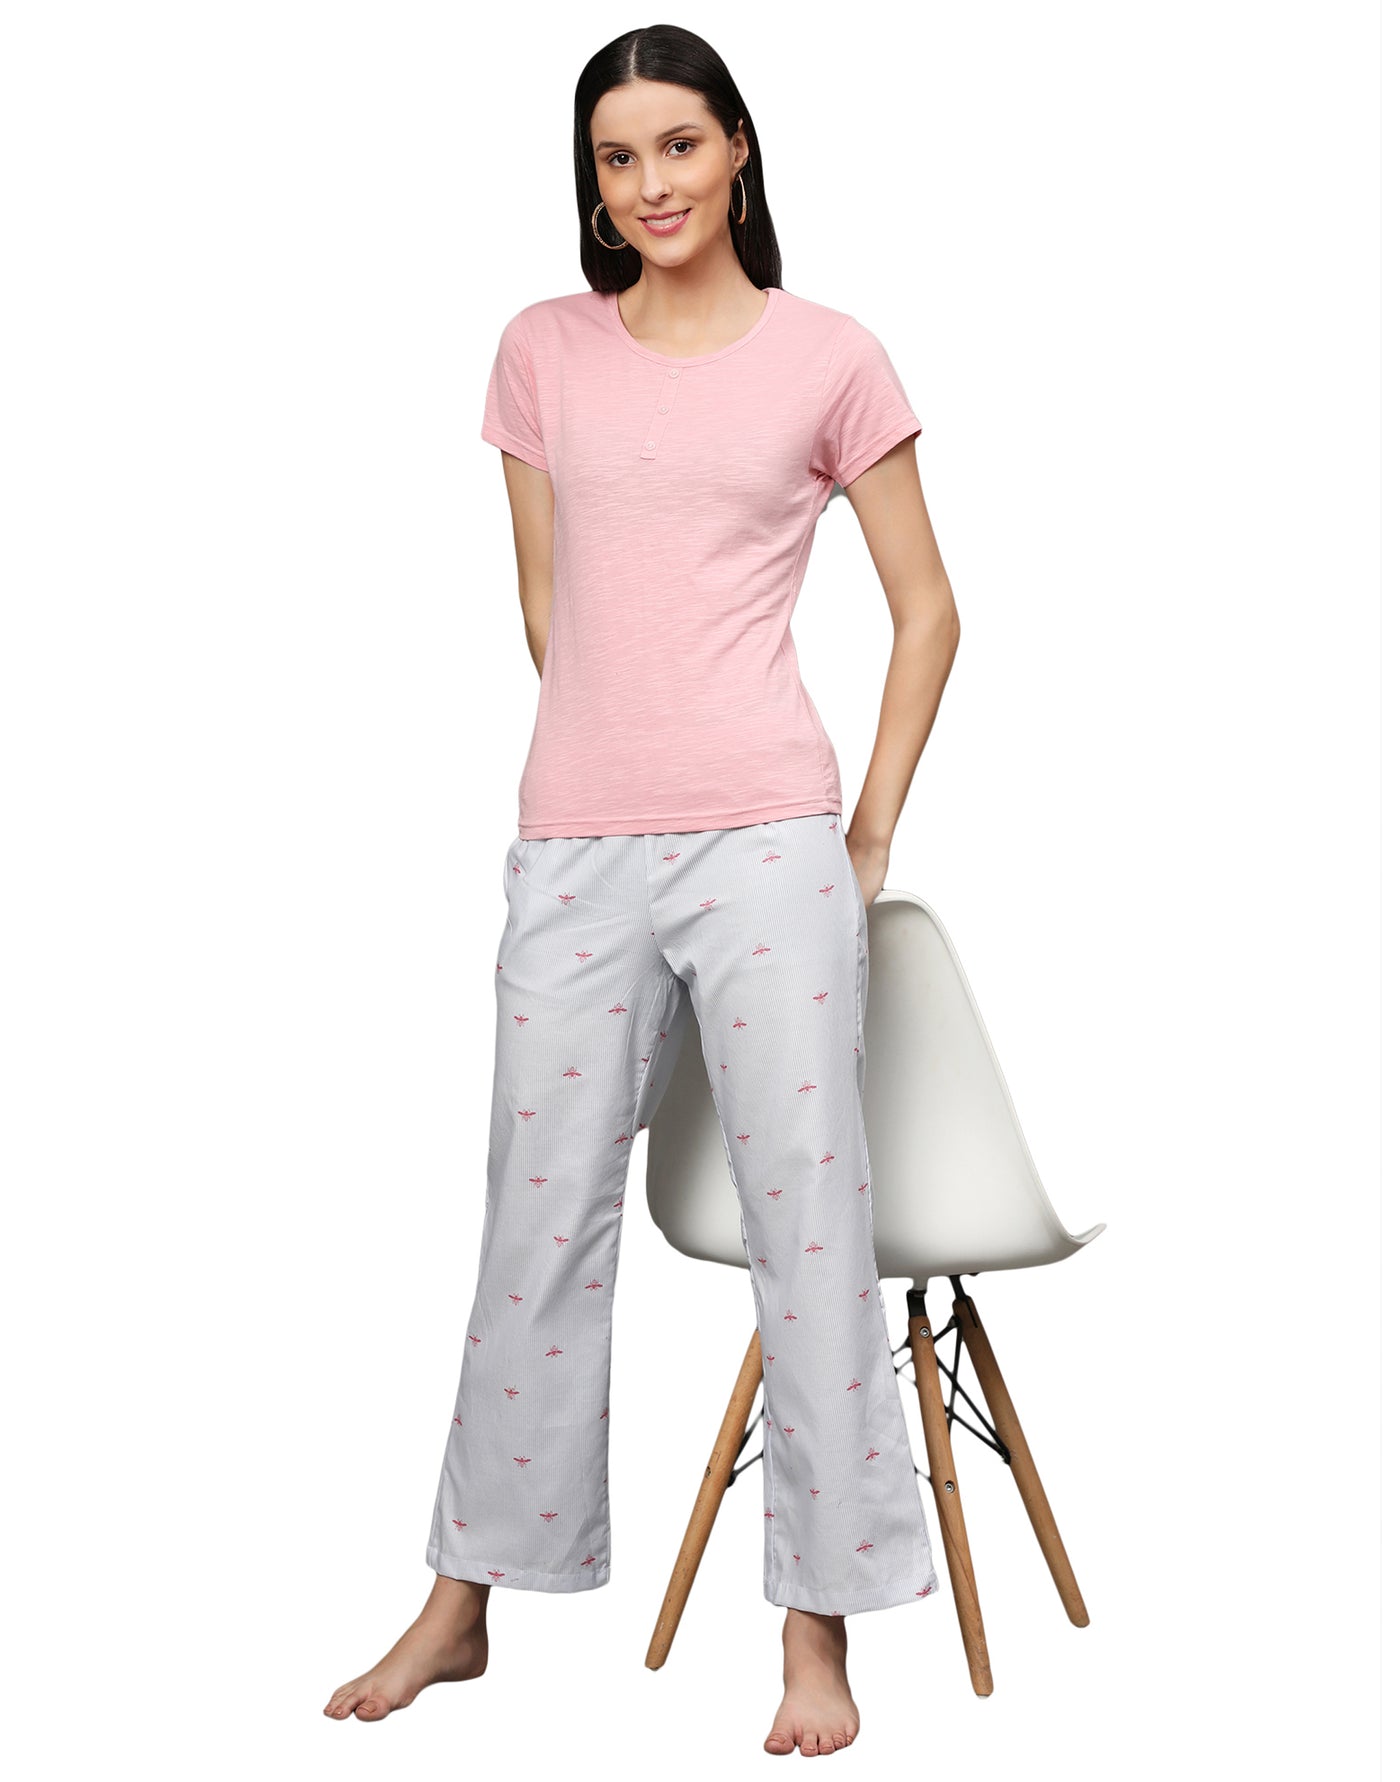 Pyjama Set for Women-Bee Print